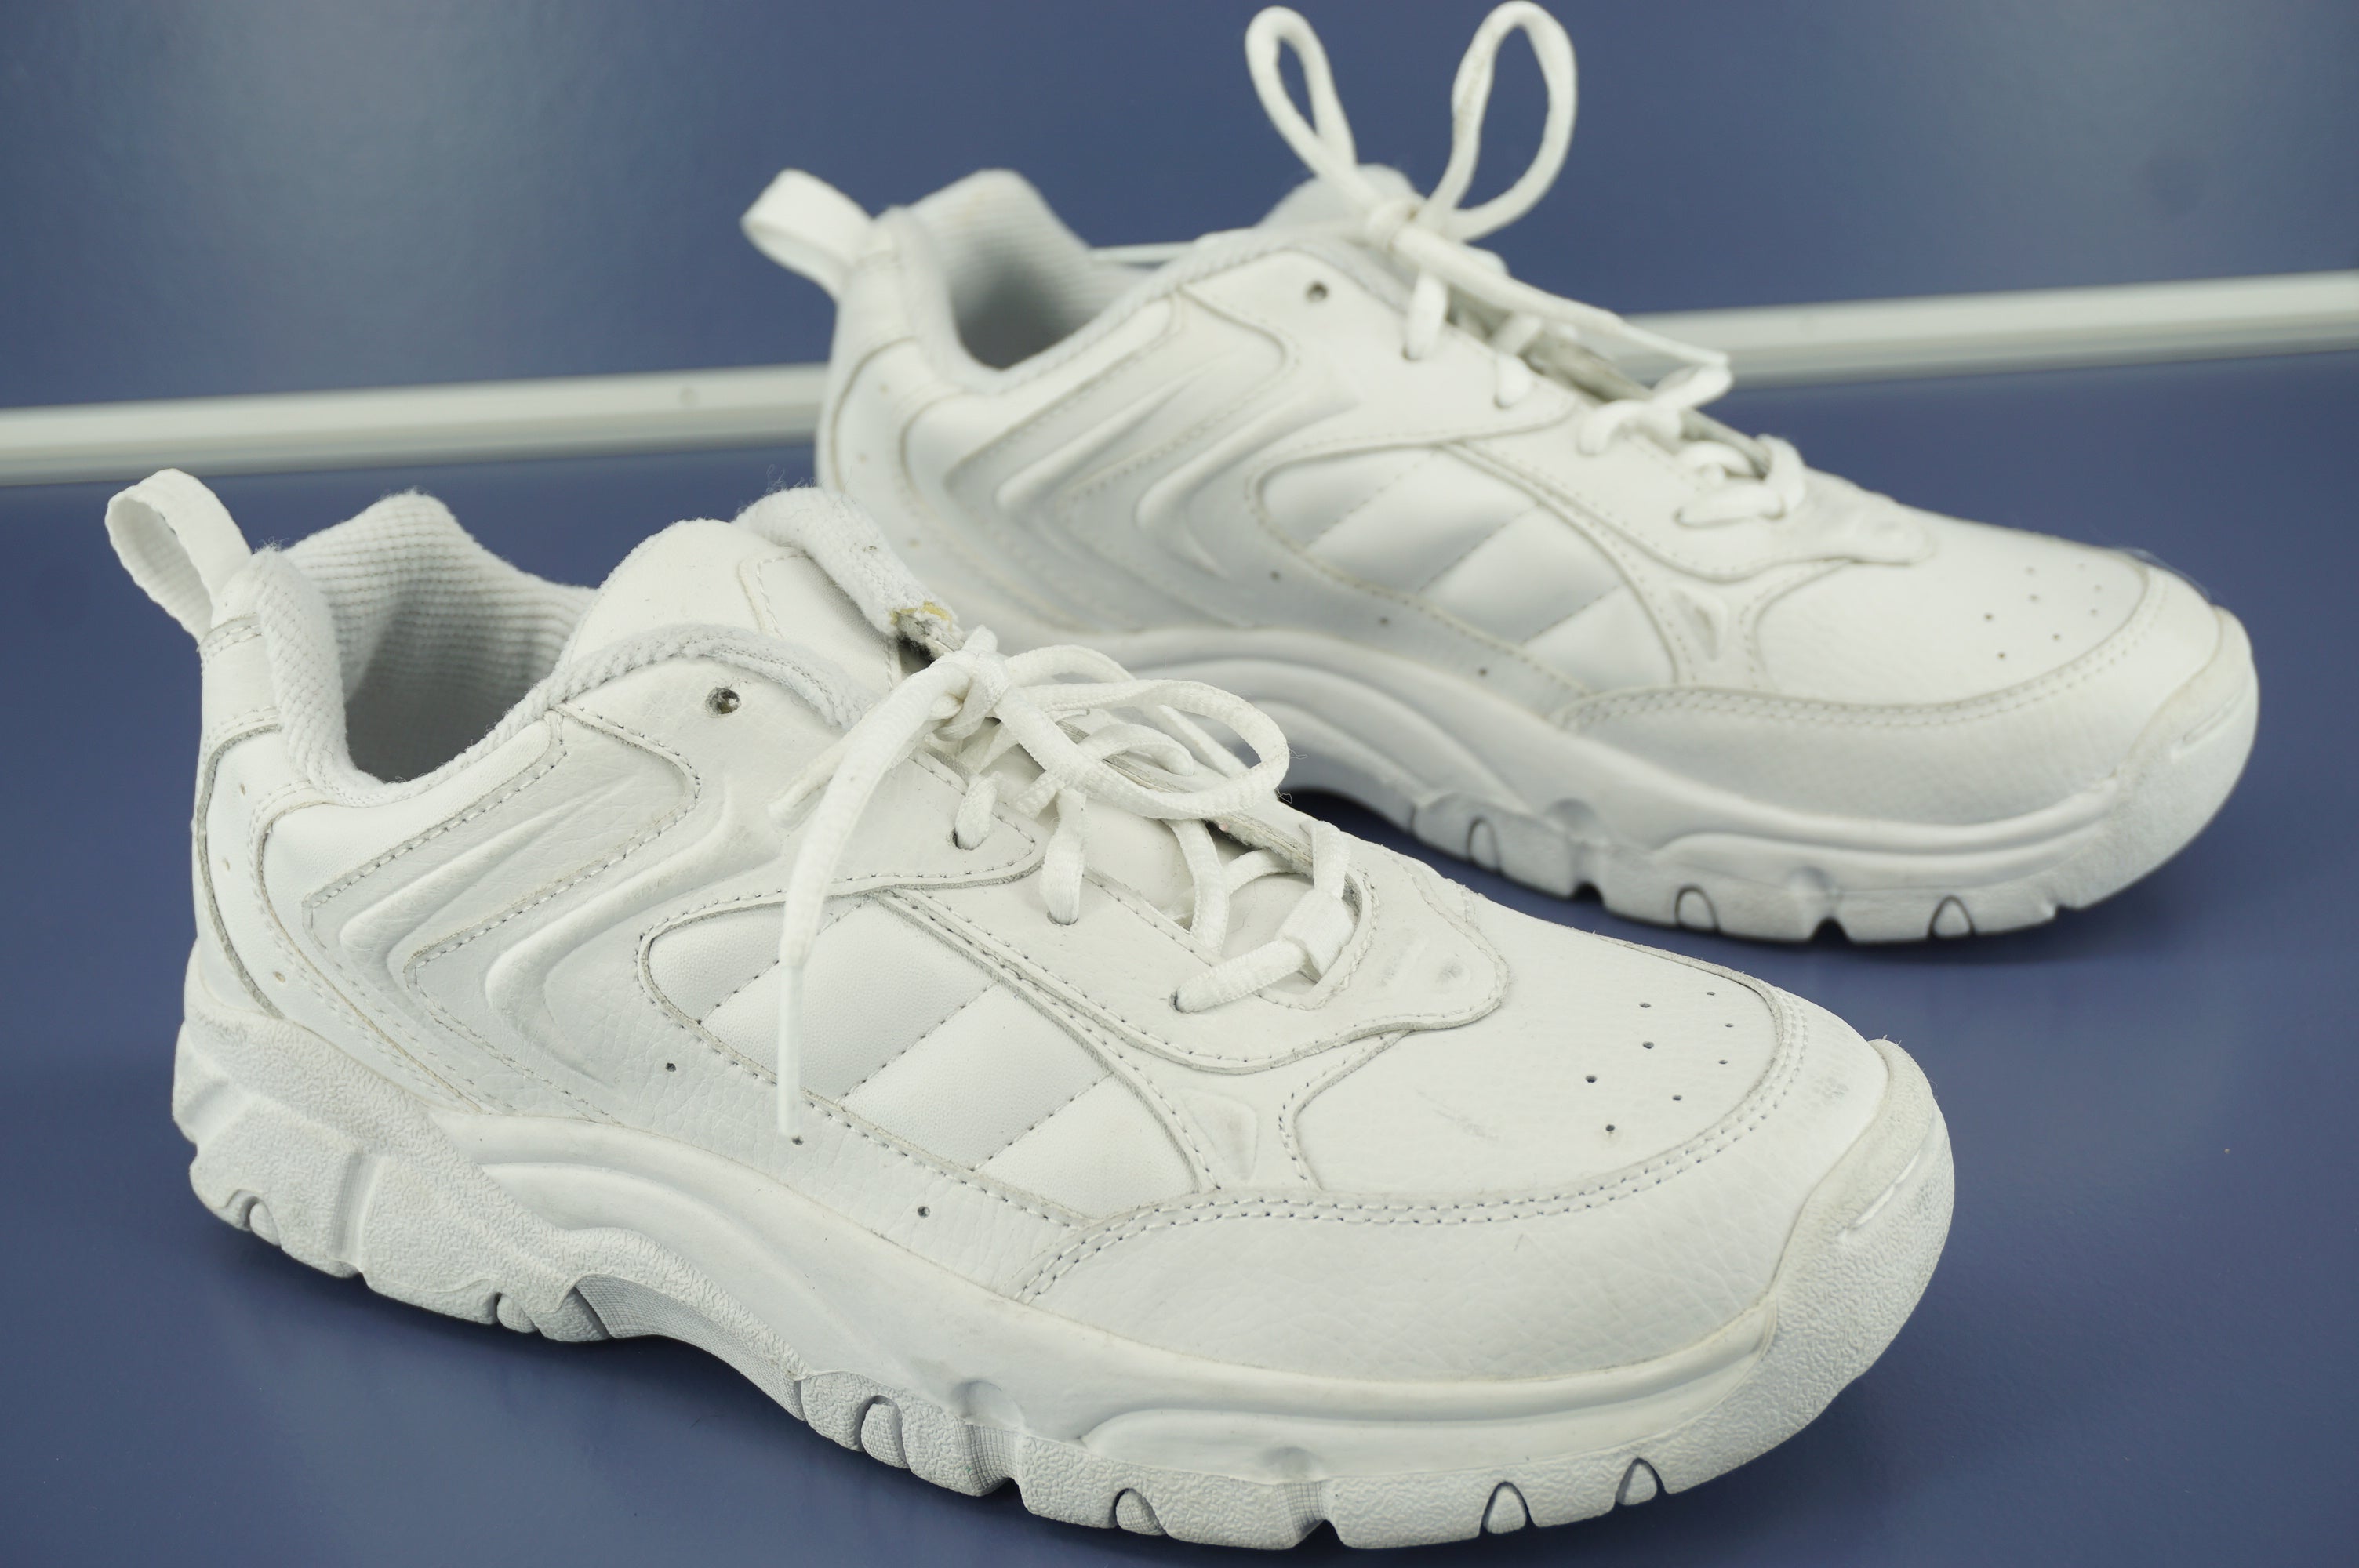 Stride Rite Austin Lace Sneaker Boys Size 5.5 XW US - 5UK - 38 EU White Leather